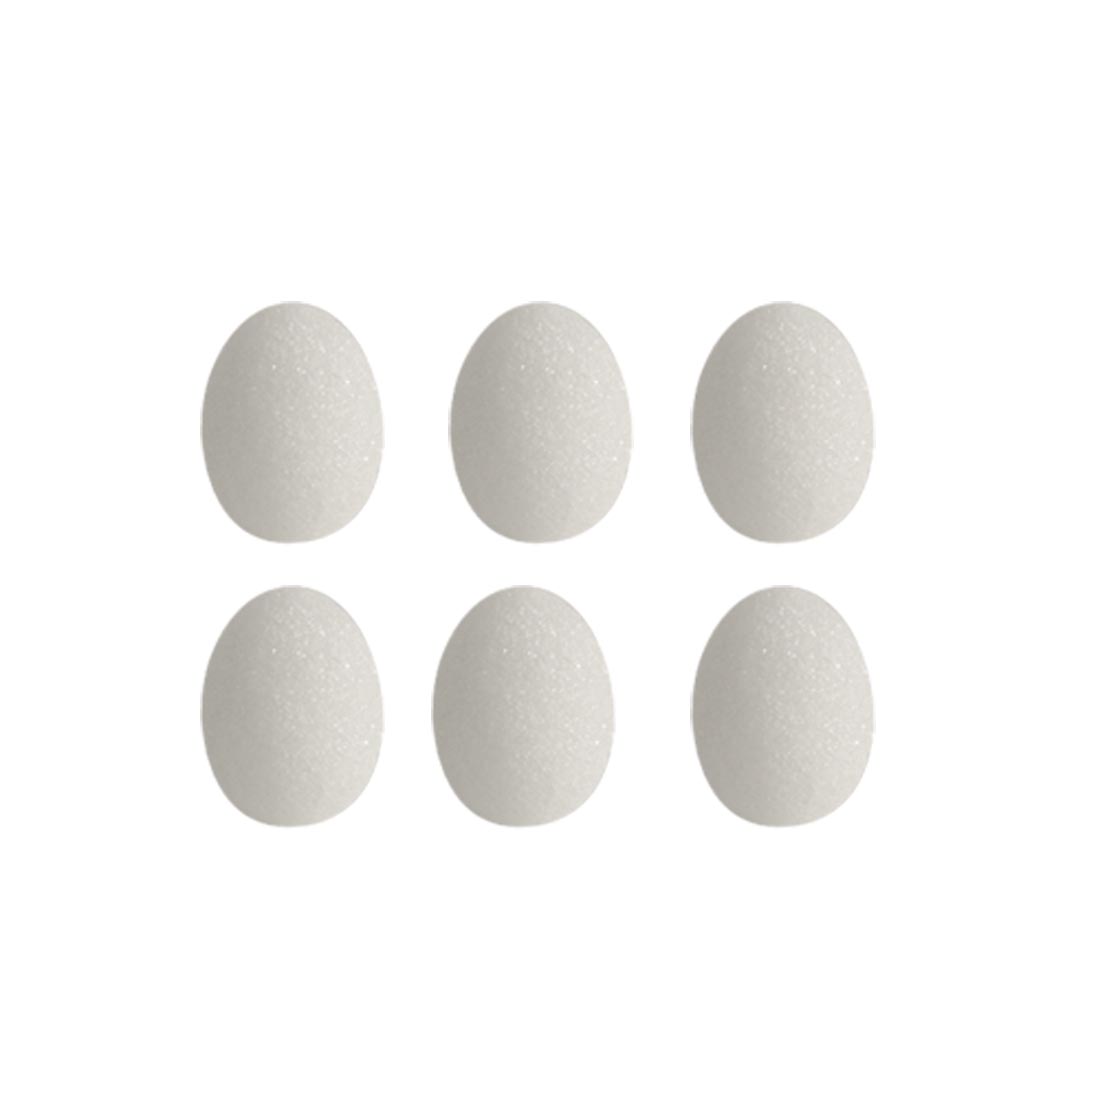 Six White Styrofoam Eggs